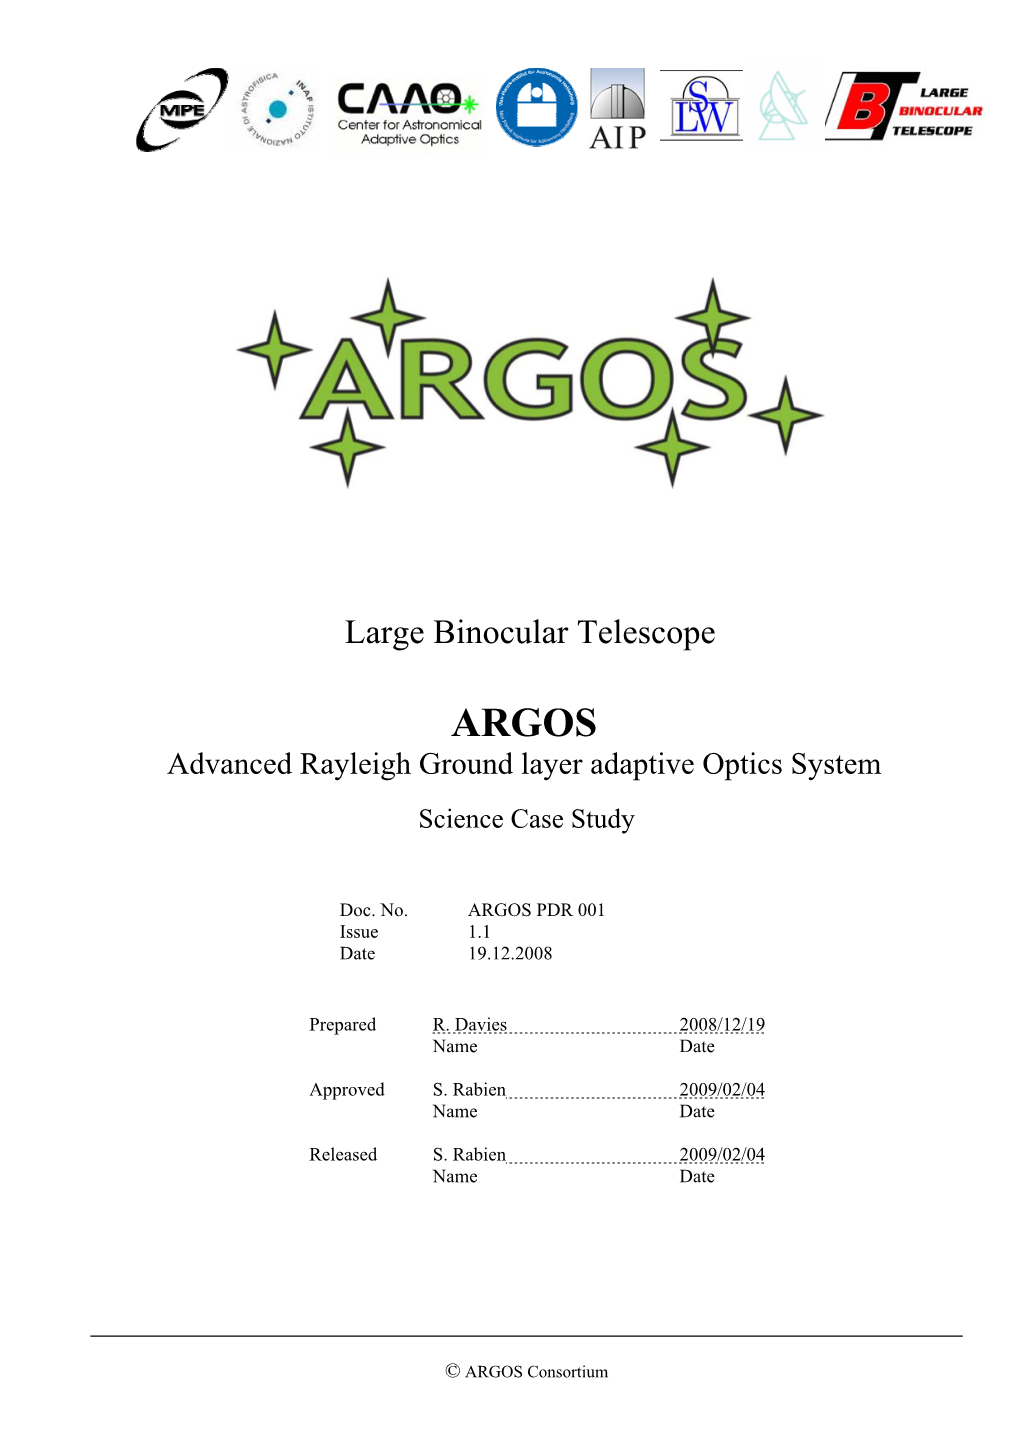 ARGOS Advanced Rayleigh Ground Layer Adaptive Optics System